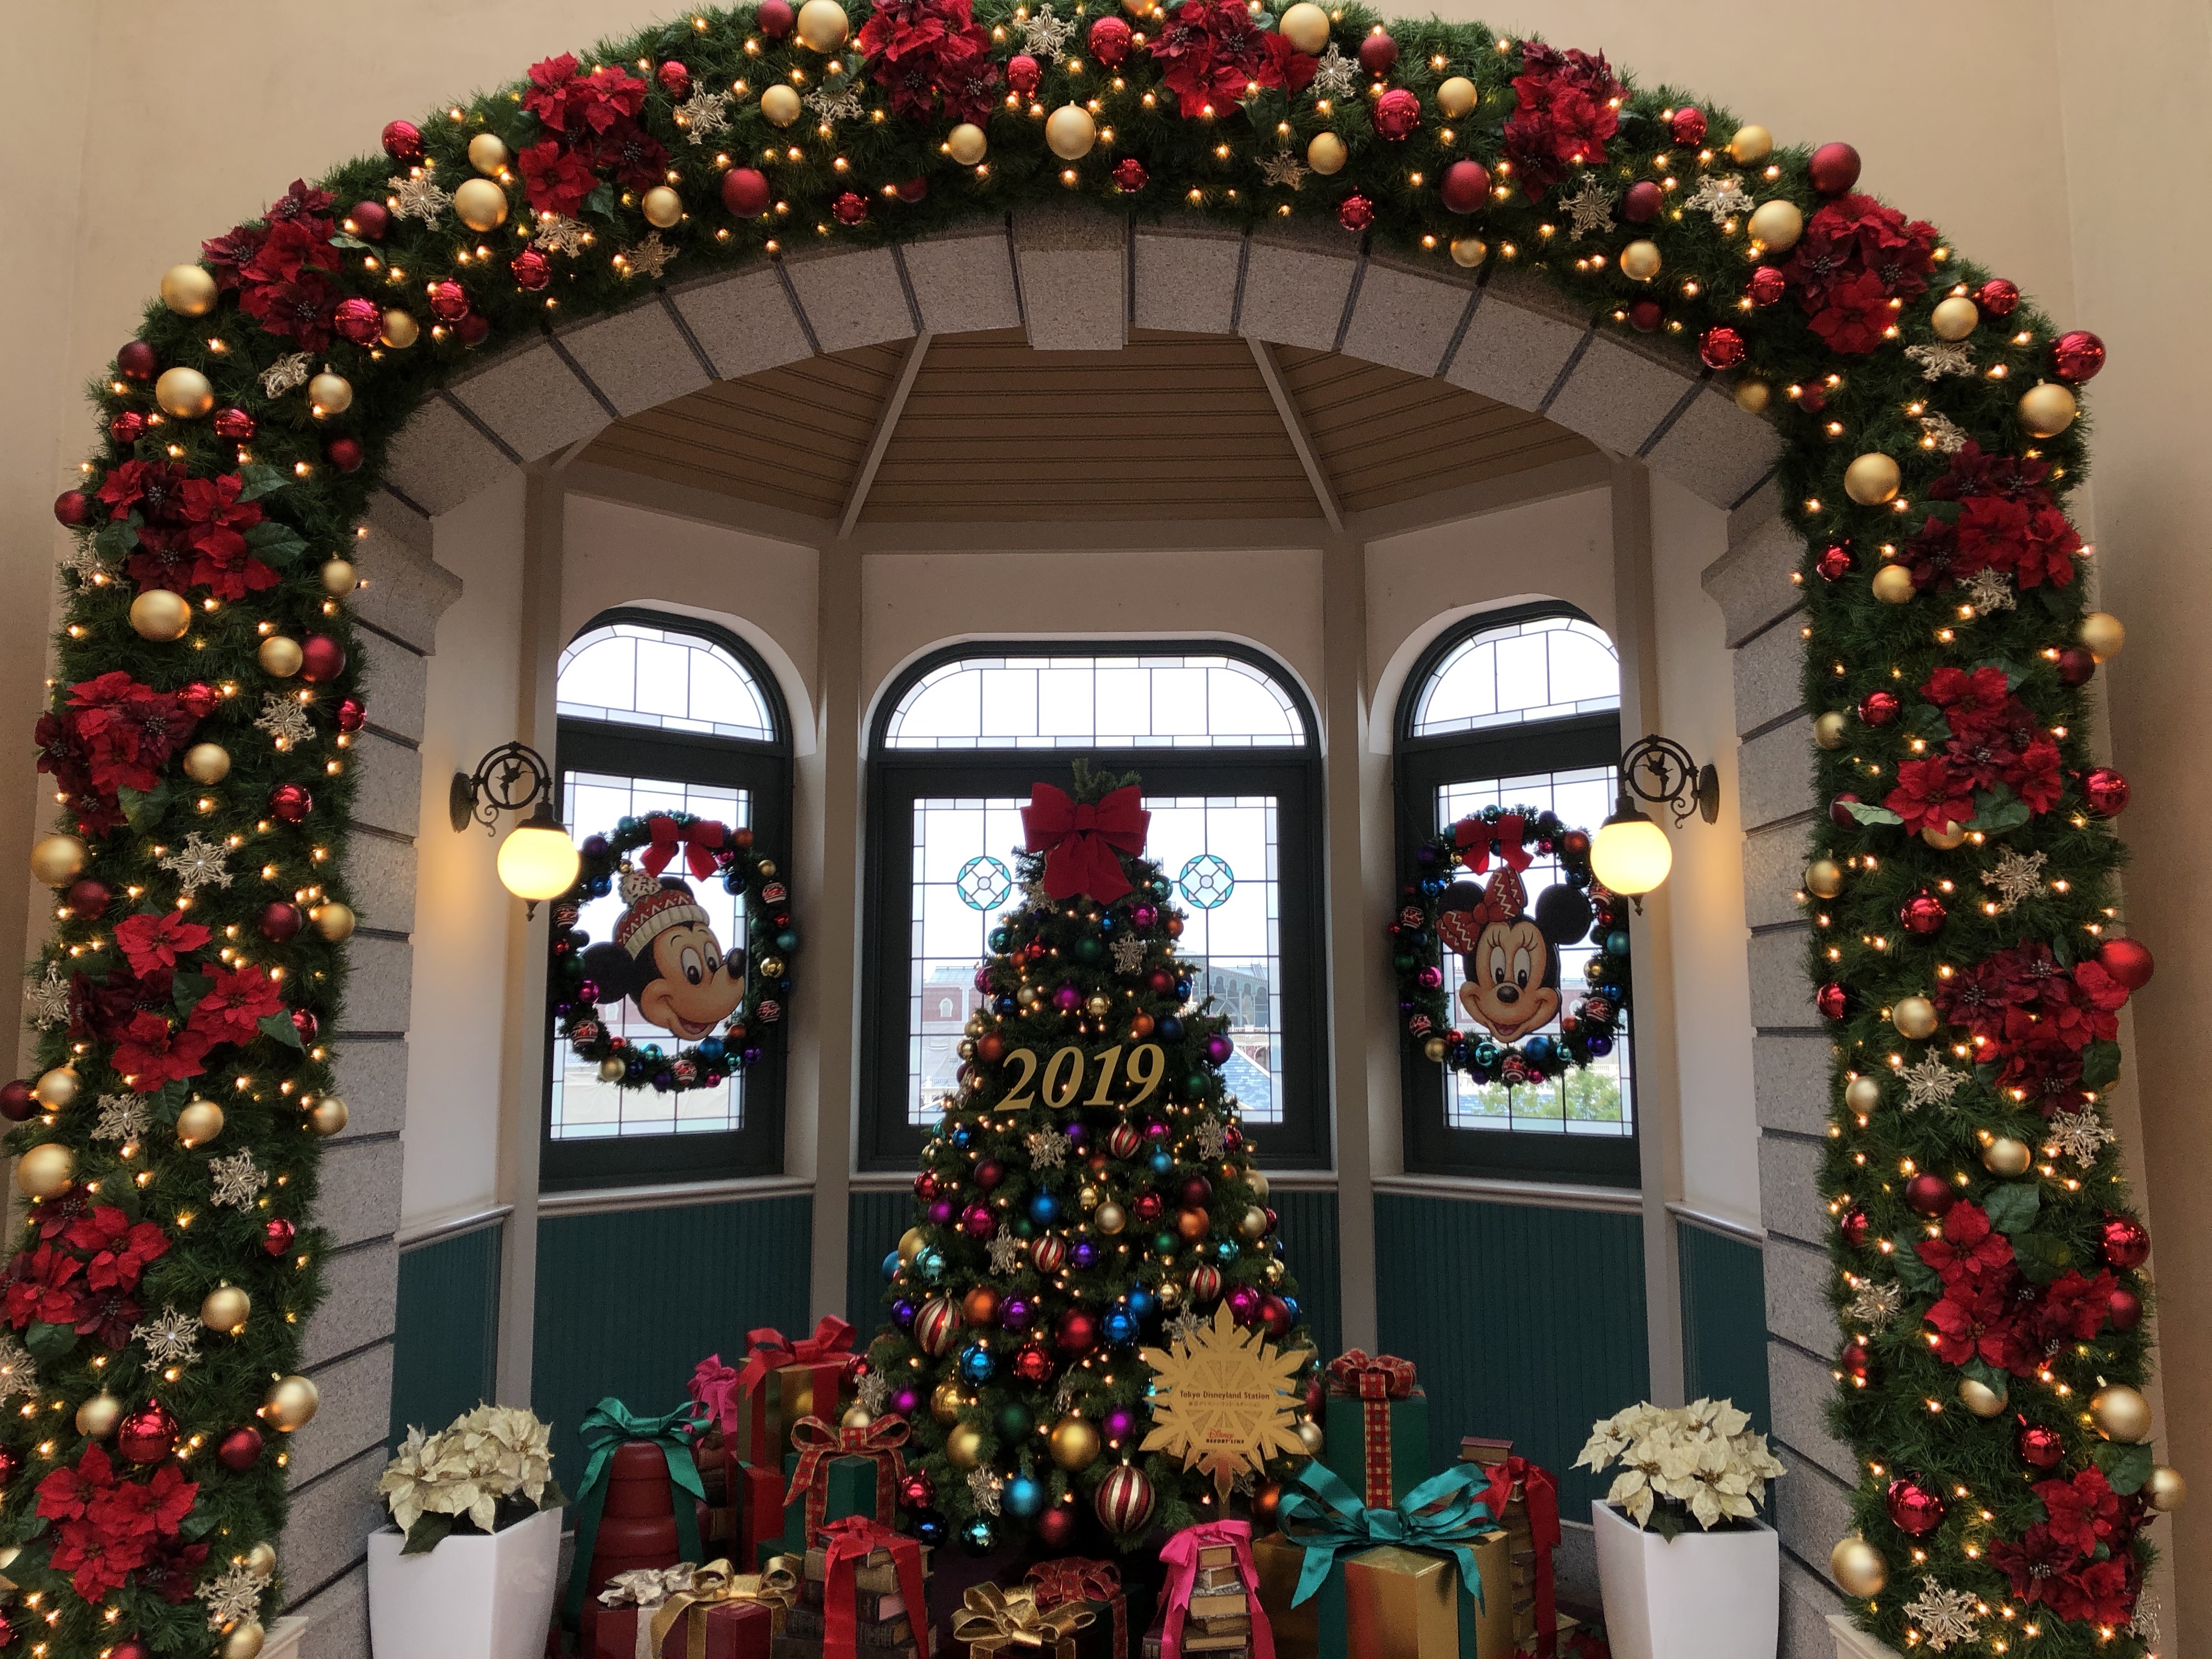 PHOTO REPORT Tokyo Disneyland 11/30/19 (Christmas Decor